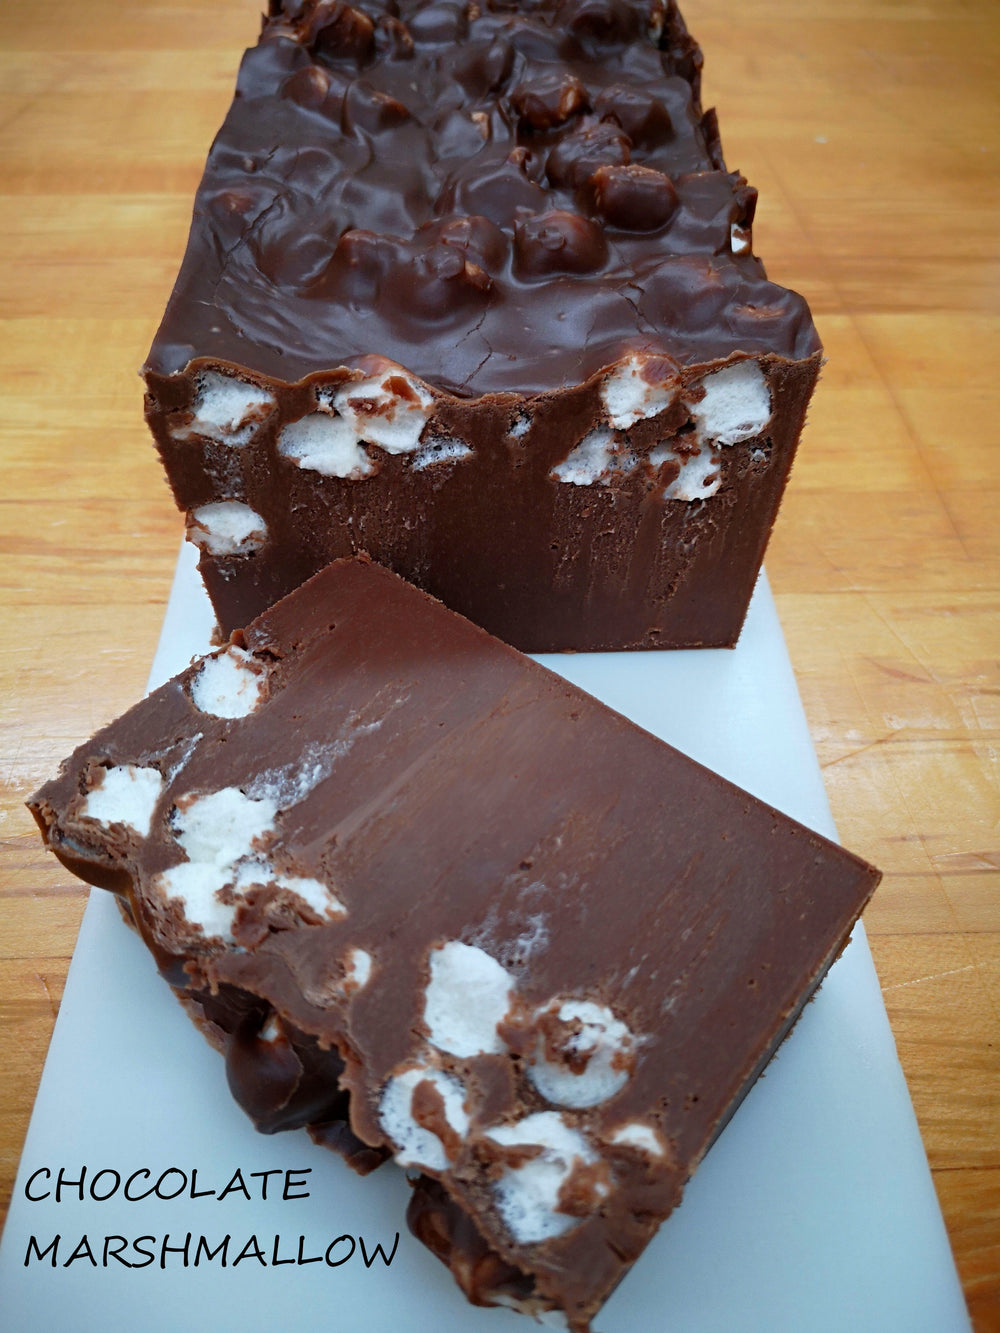 Bulk 5 lb. Slab - Chocolate Marshmallow - $35.75